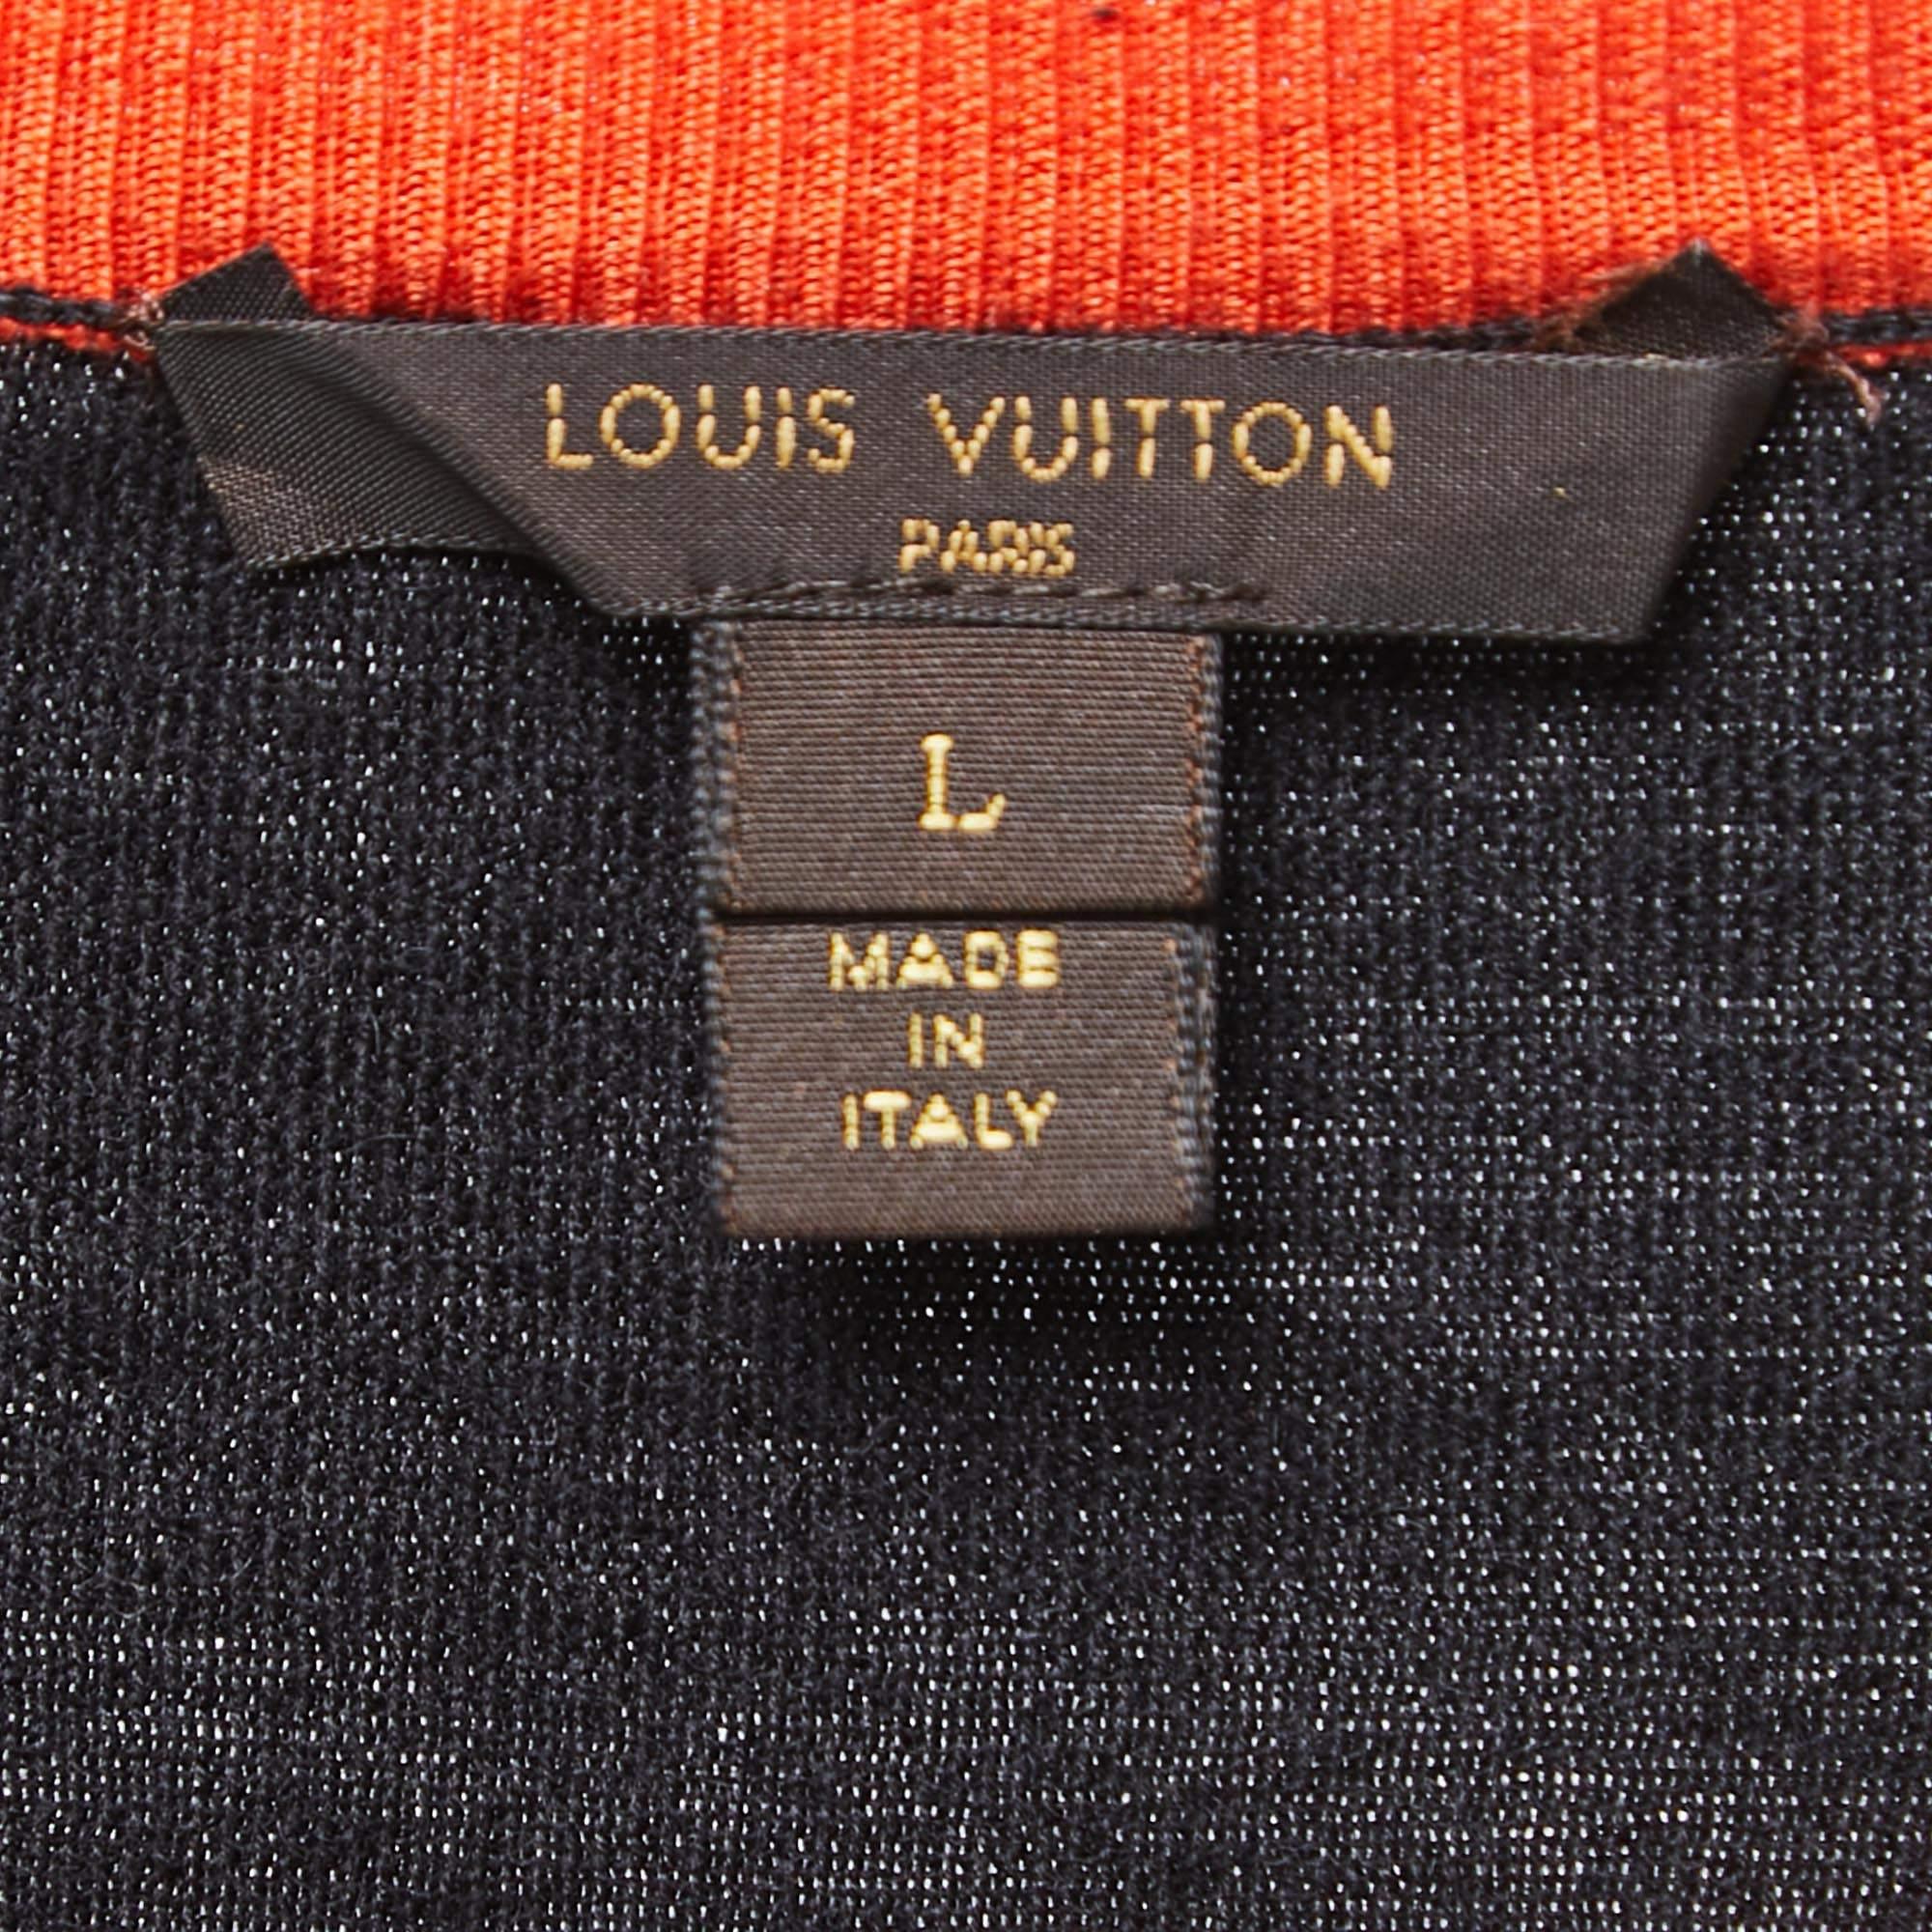 Women's Louis Vuitton Black Cashmere & Silk Knit Embellished Top L